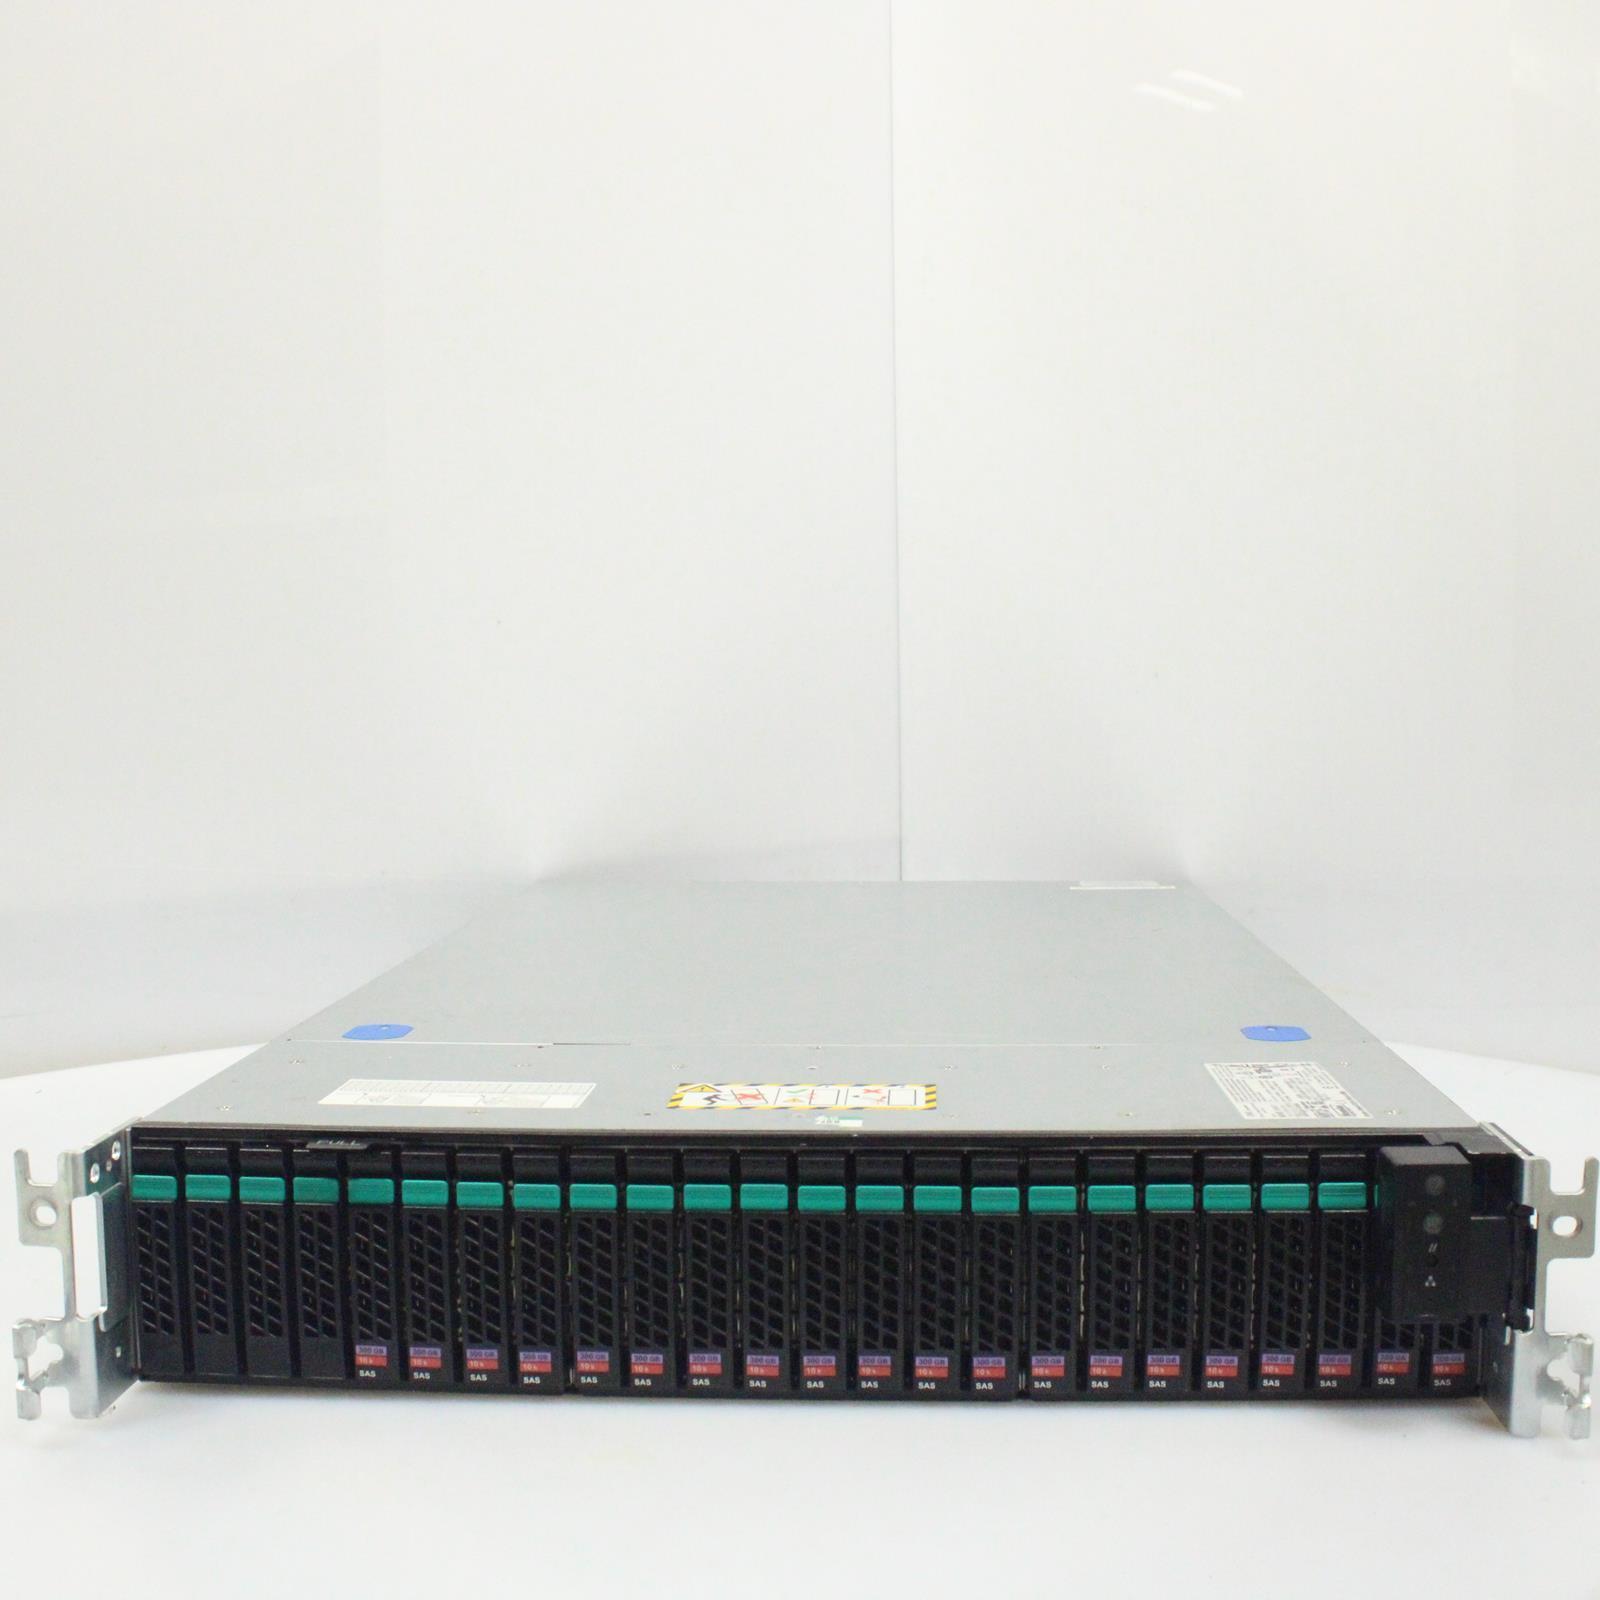 EMC DRBGP 1x INTEL XEON E5-2603 128GB 200Gb SSD, 11x 4TB HDD TrueNAS Core Server